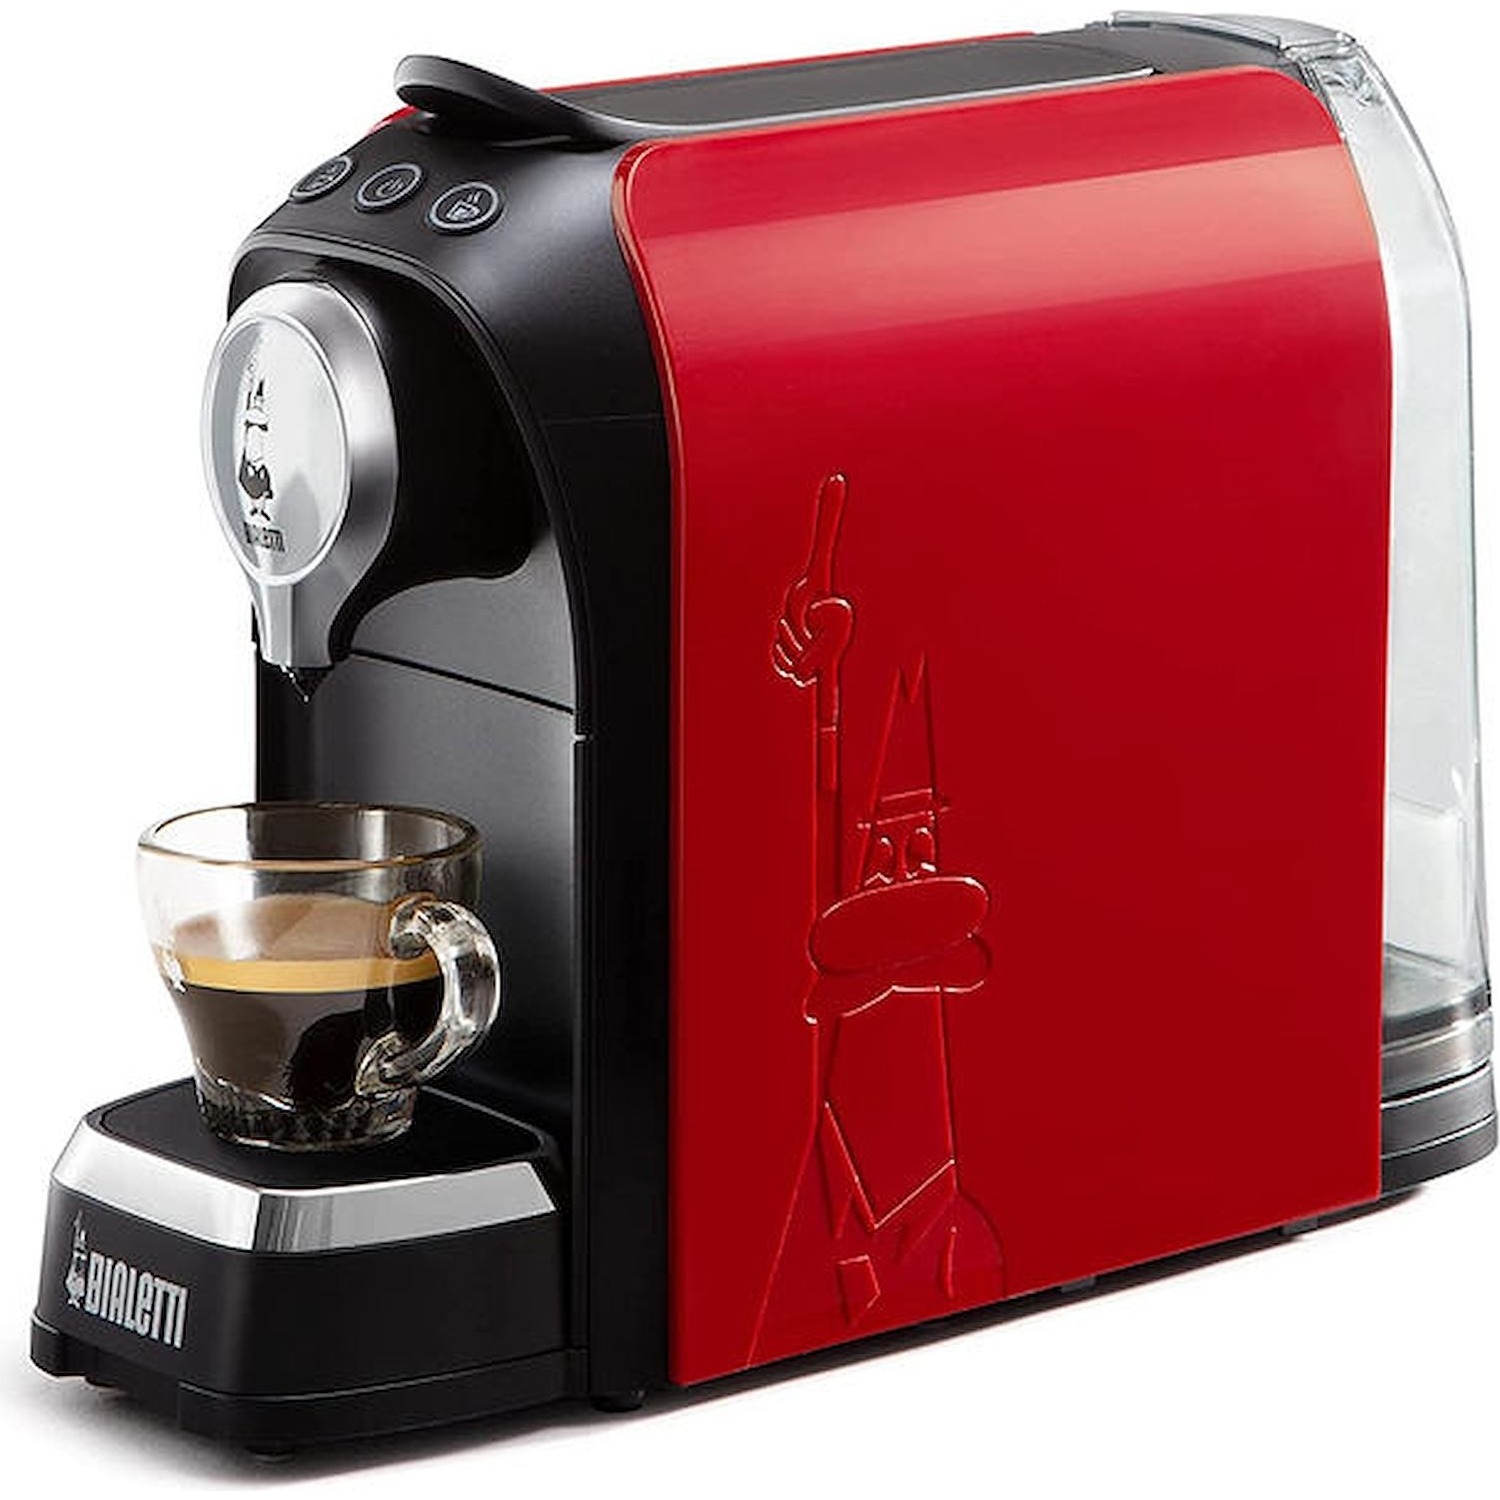 Image of Macchina da caffè a capsule sistema Bialetti super red rosso confezione 32 capsule incluse